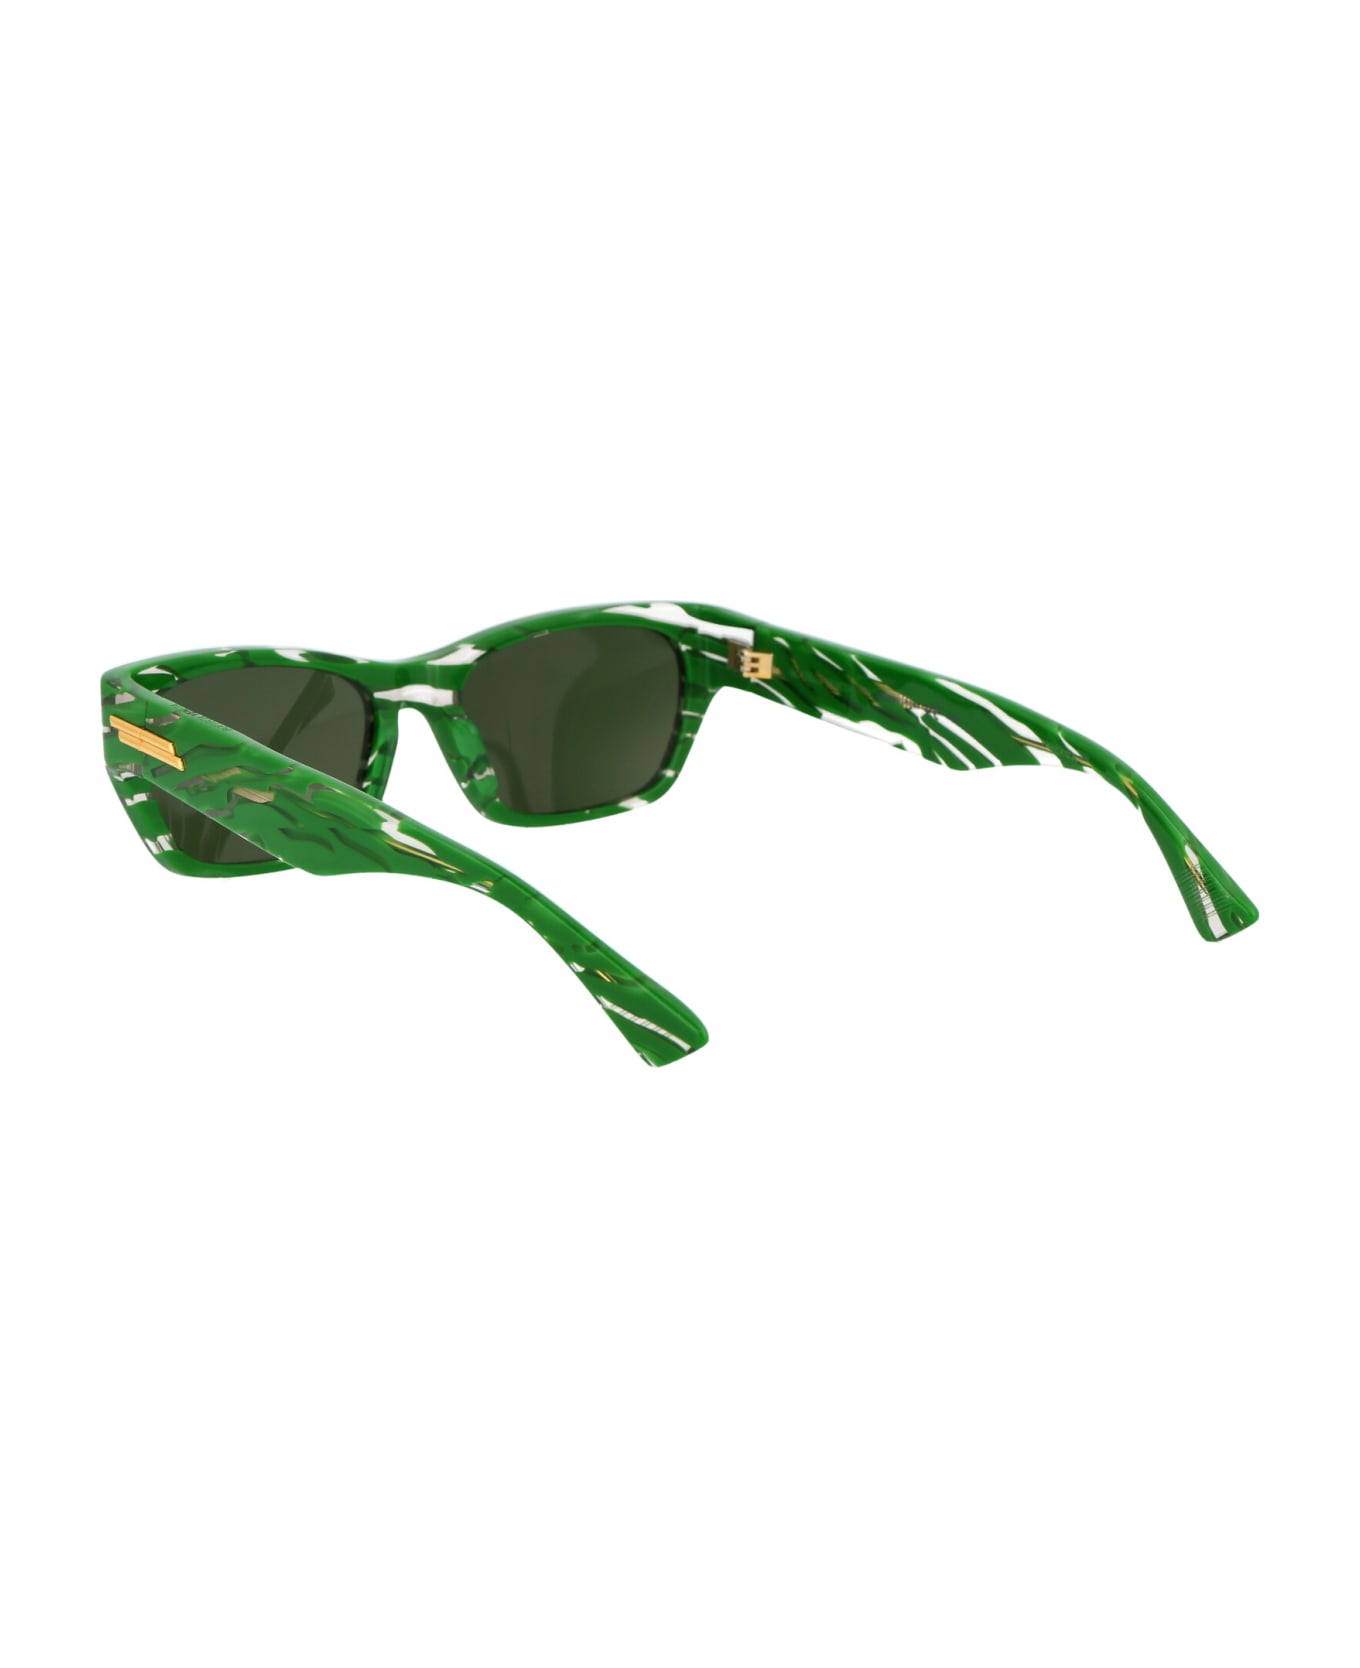 Bottega Veneta Eyewear Bv1143s Sunglasses - 004 GREEN GREEN GREEN